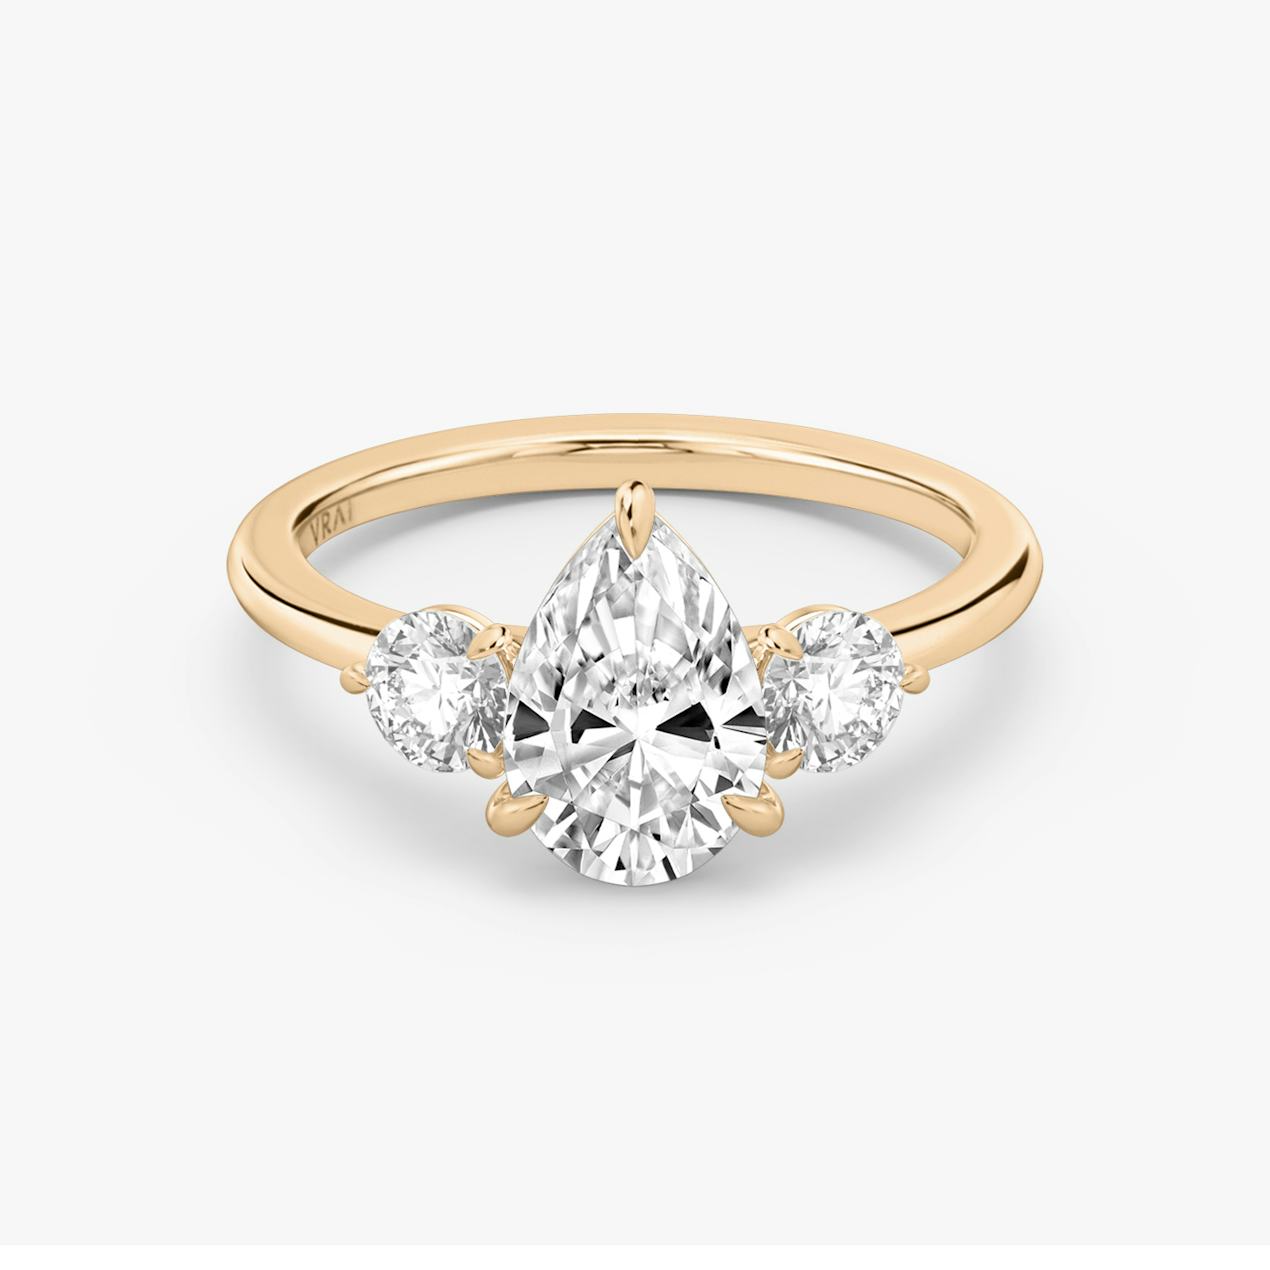 Three stone Pear Diamond Engagement Ring